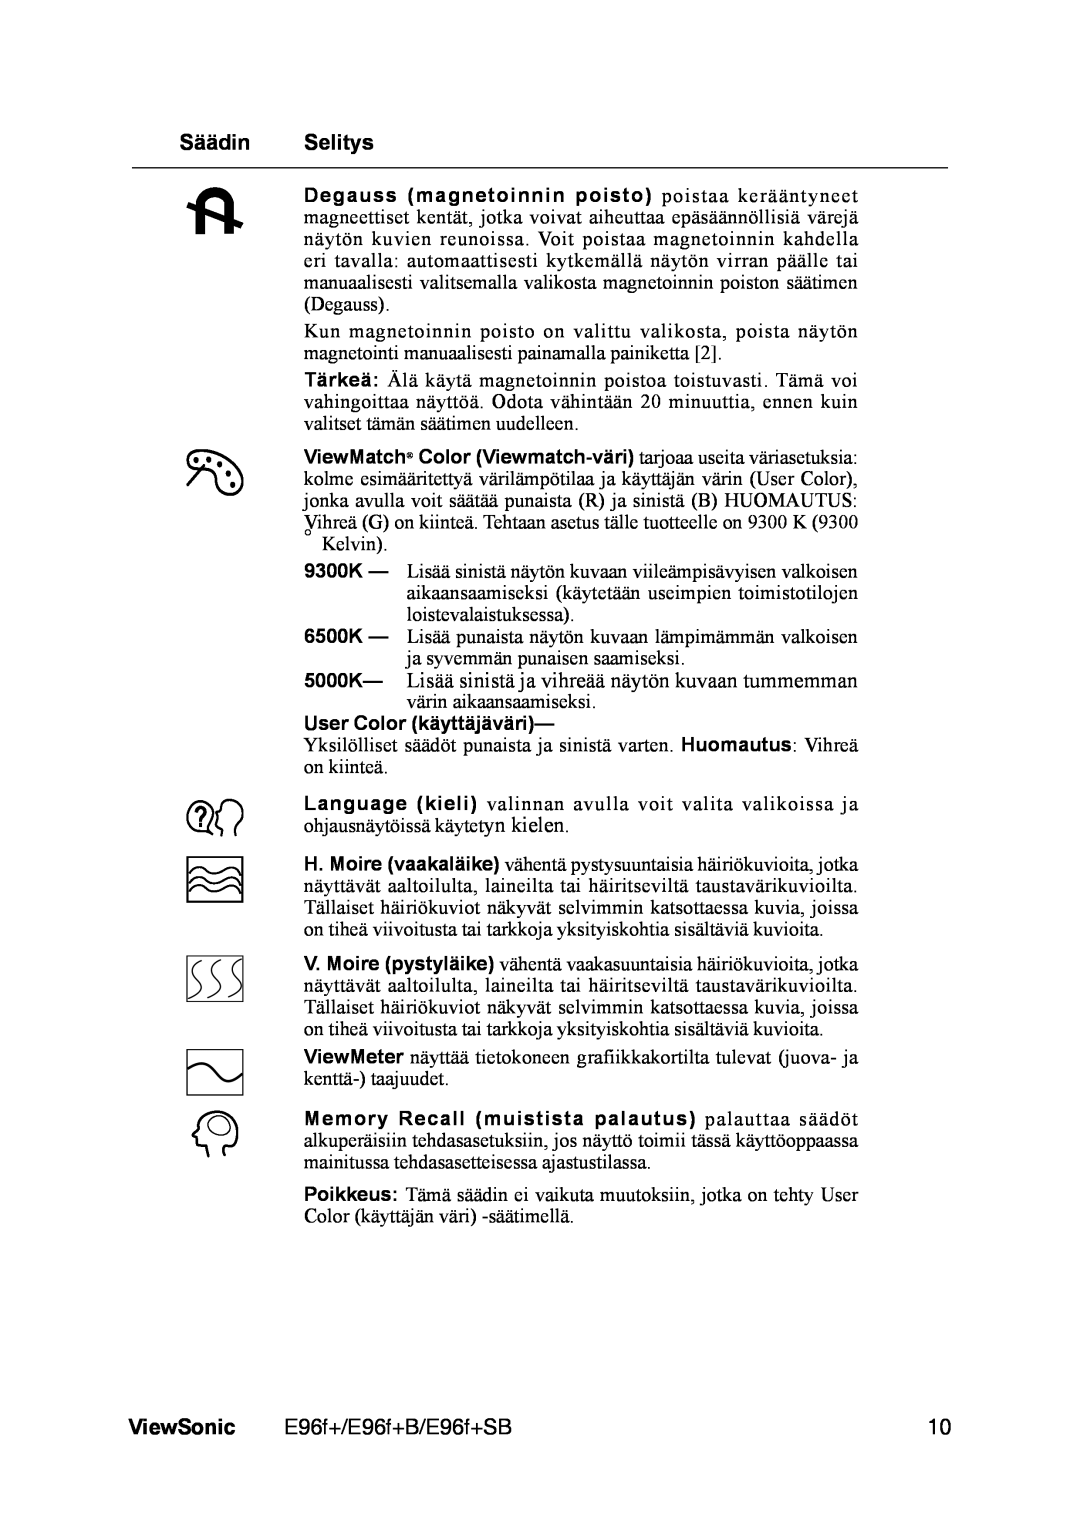 ViewSonic E96f+ manual Säädin Selitys, ViewSonic, User Color käyttäjäväri 